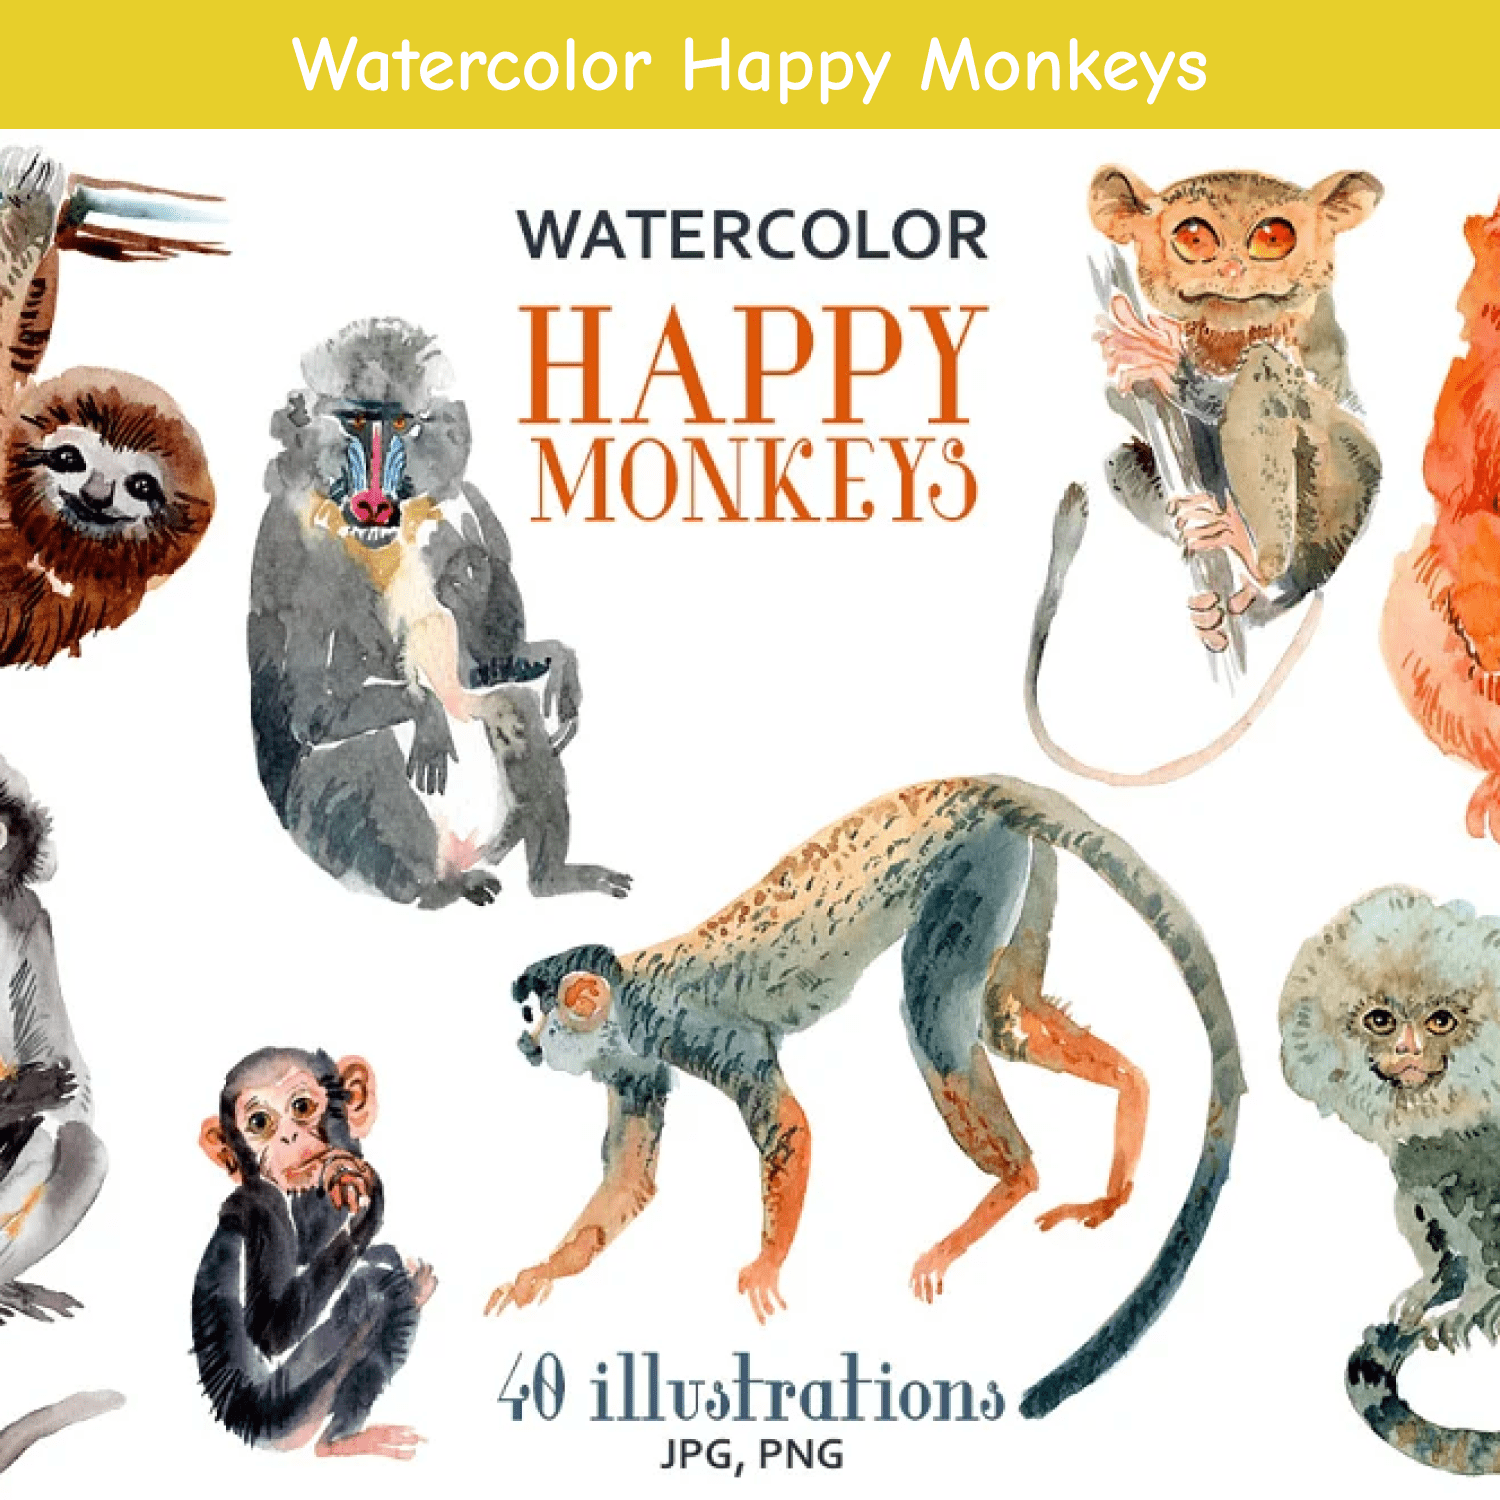 Watercolor Happy Monkeys cover.